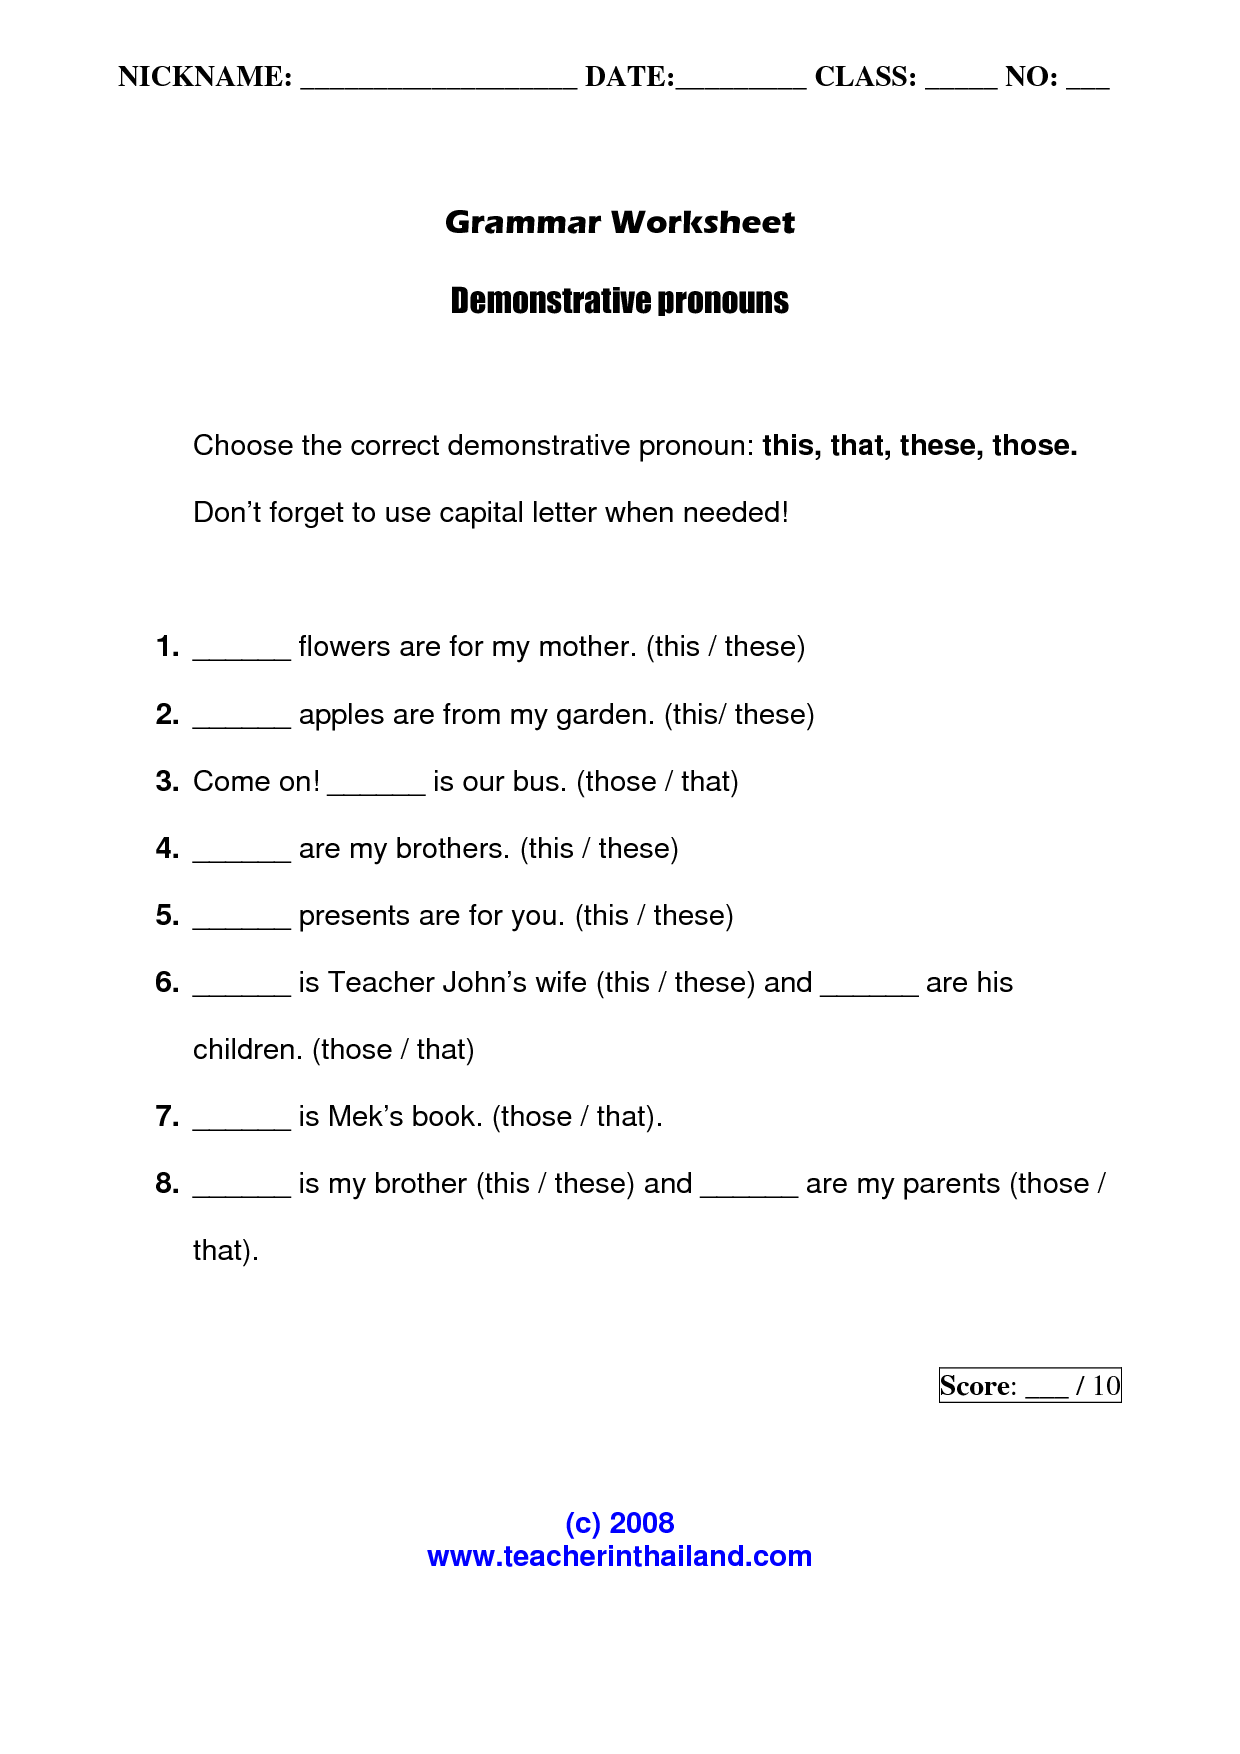 Demonstrative Pronouns Worksheet Image